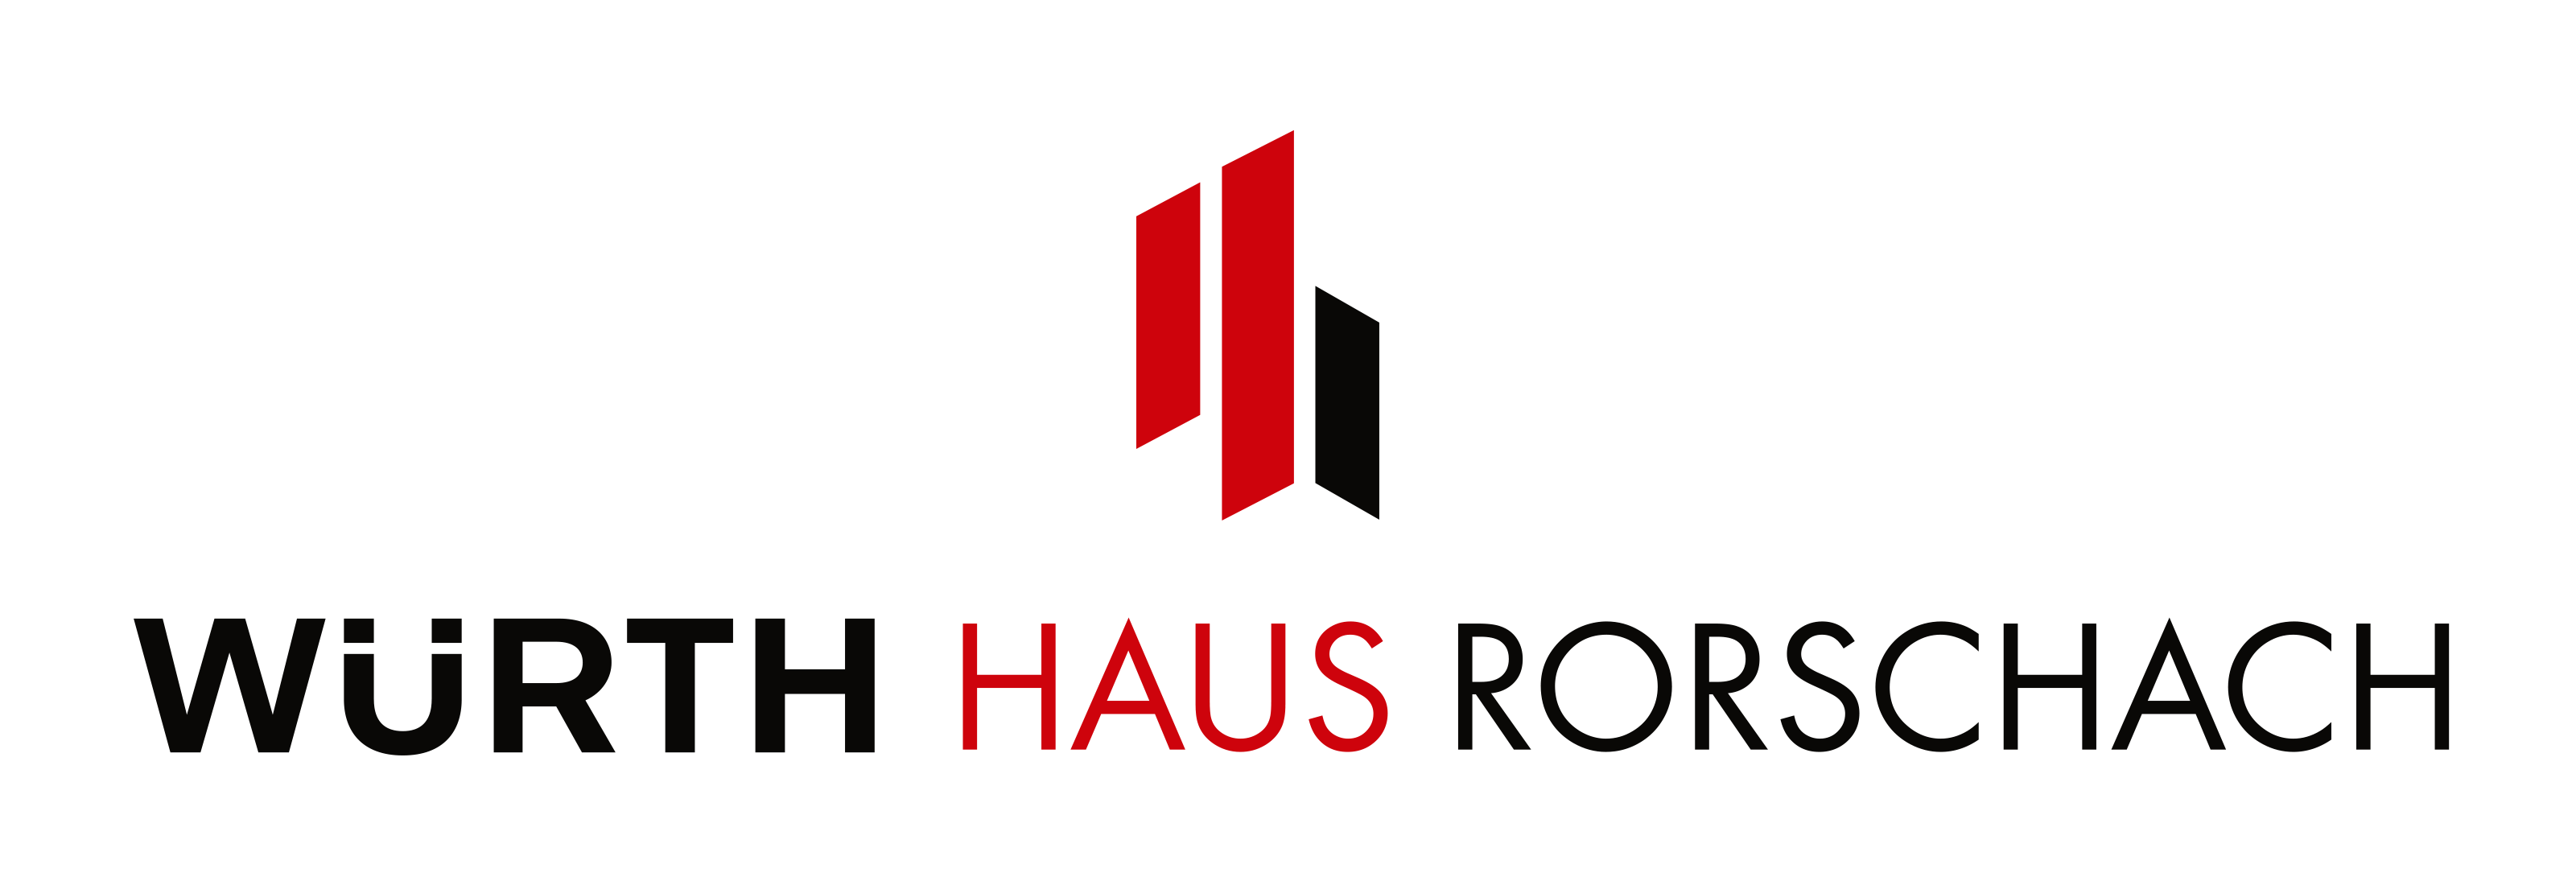 WUERTH_HAUS_RORSCHACH_RGB